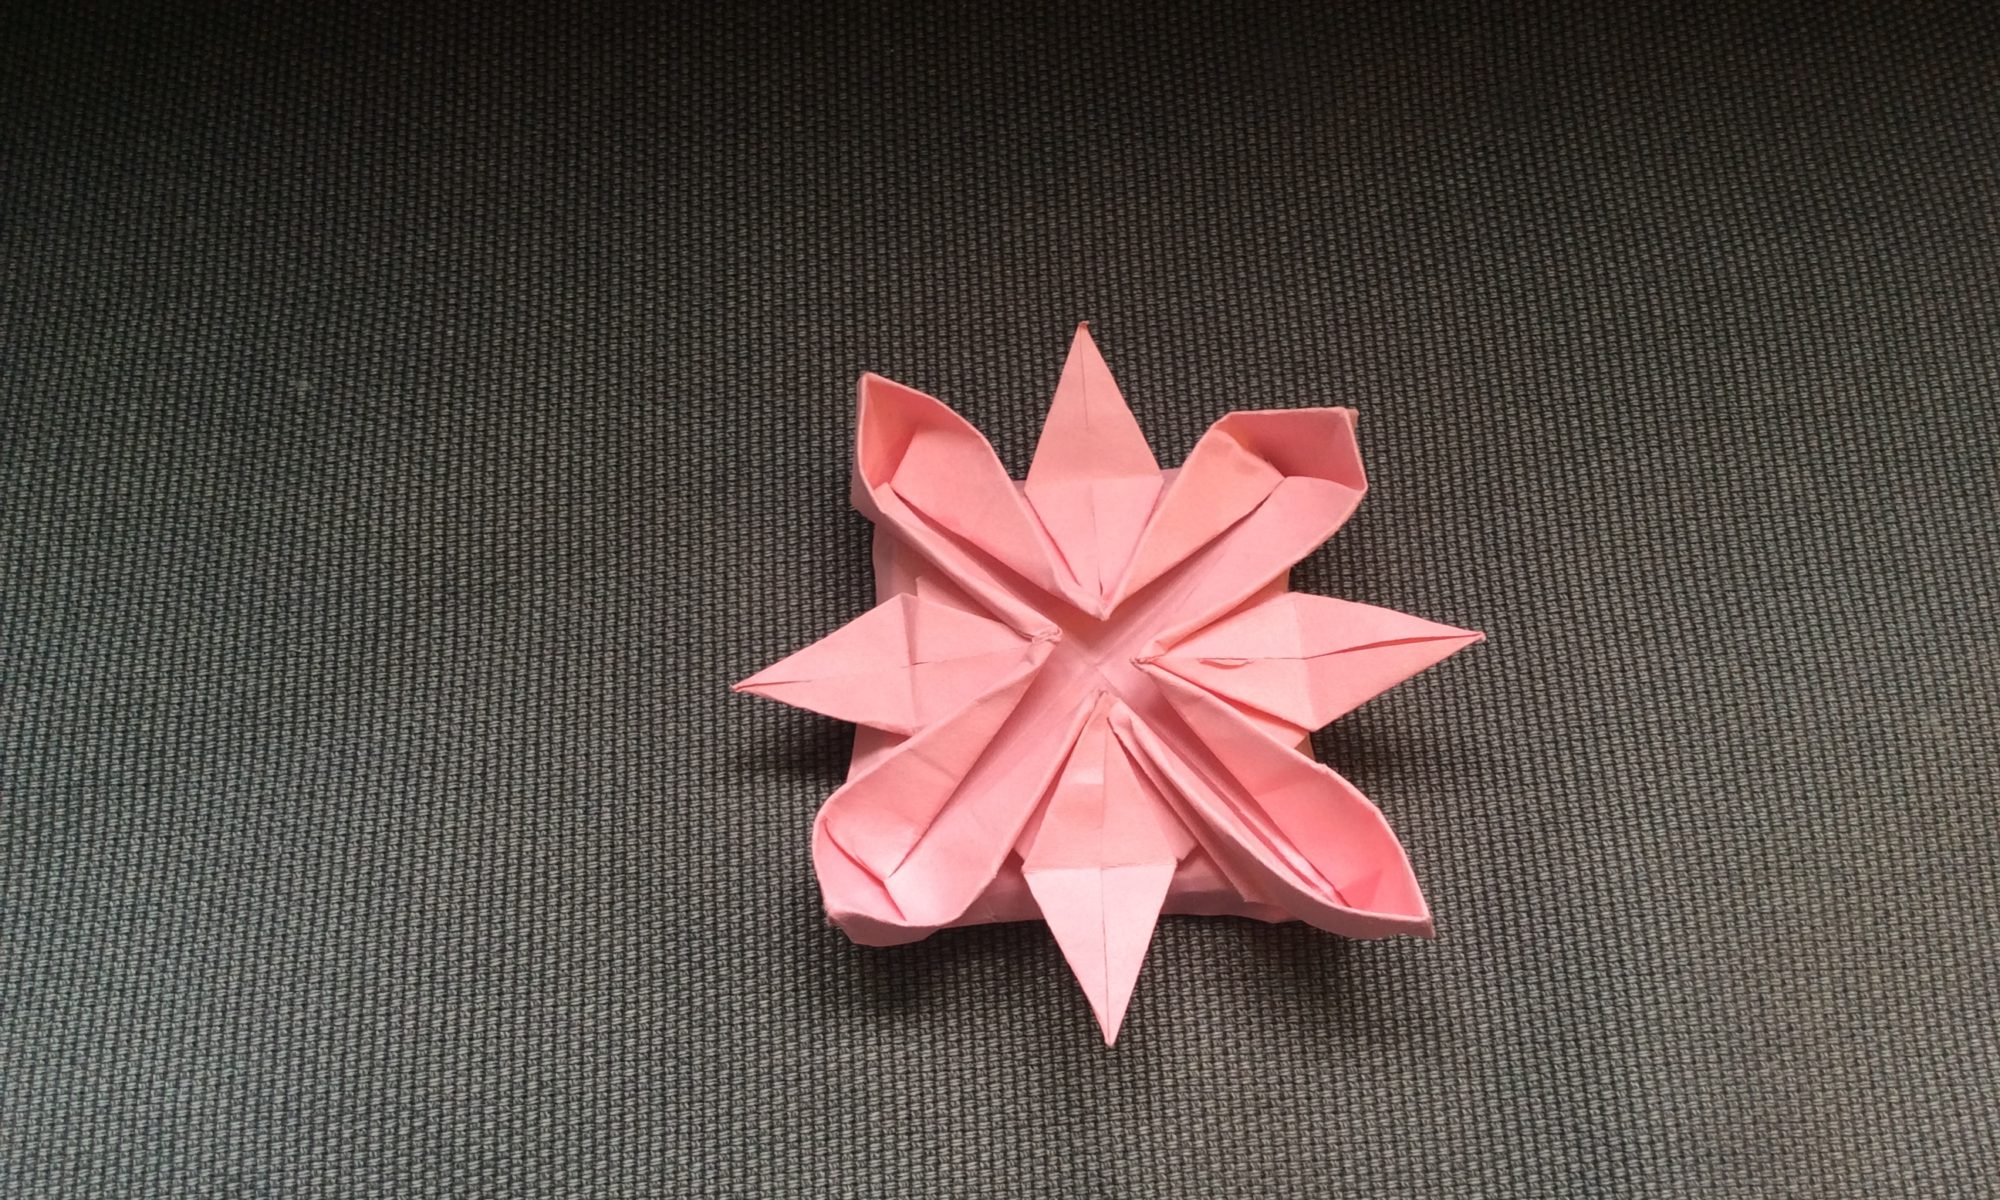 Lotus Flower Origami Origami Lotus Flower Wavyocean